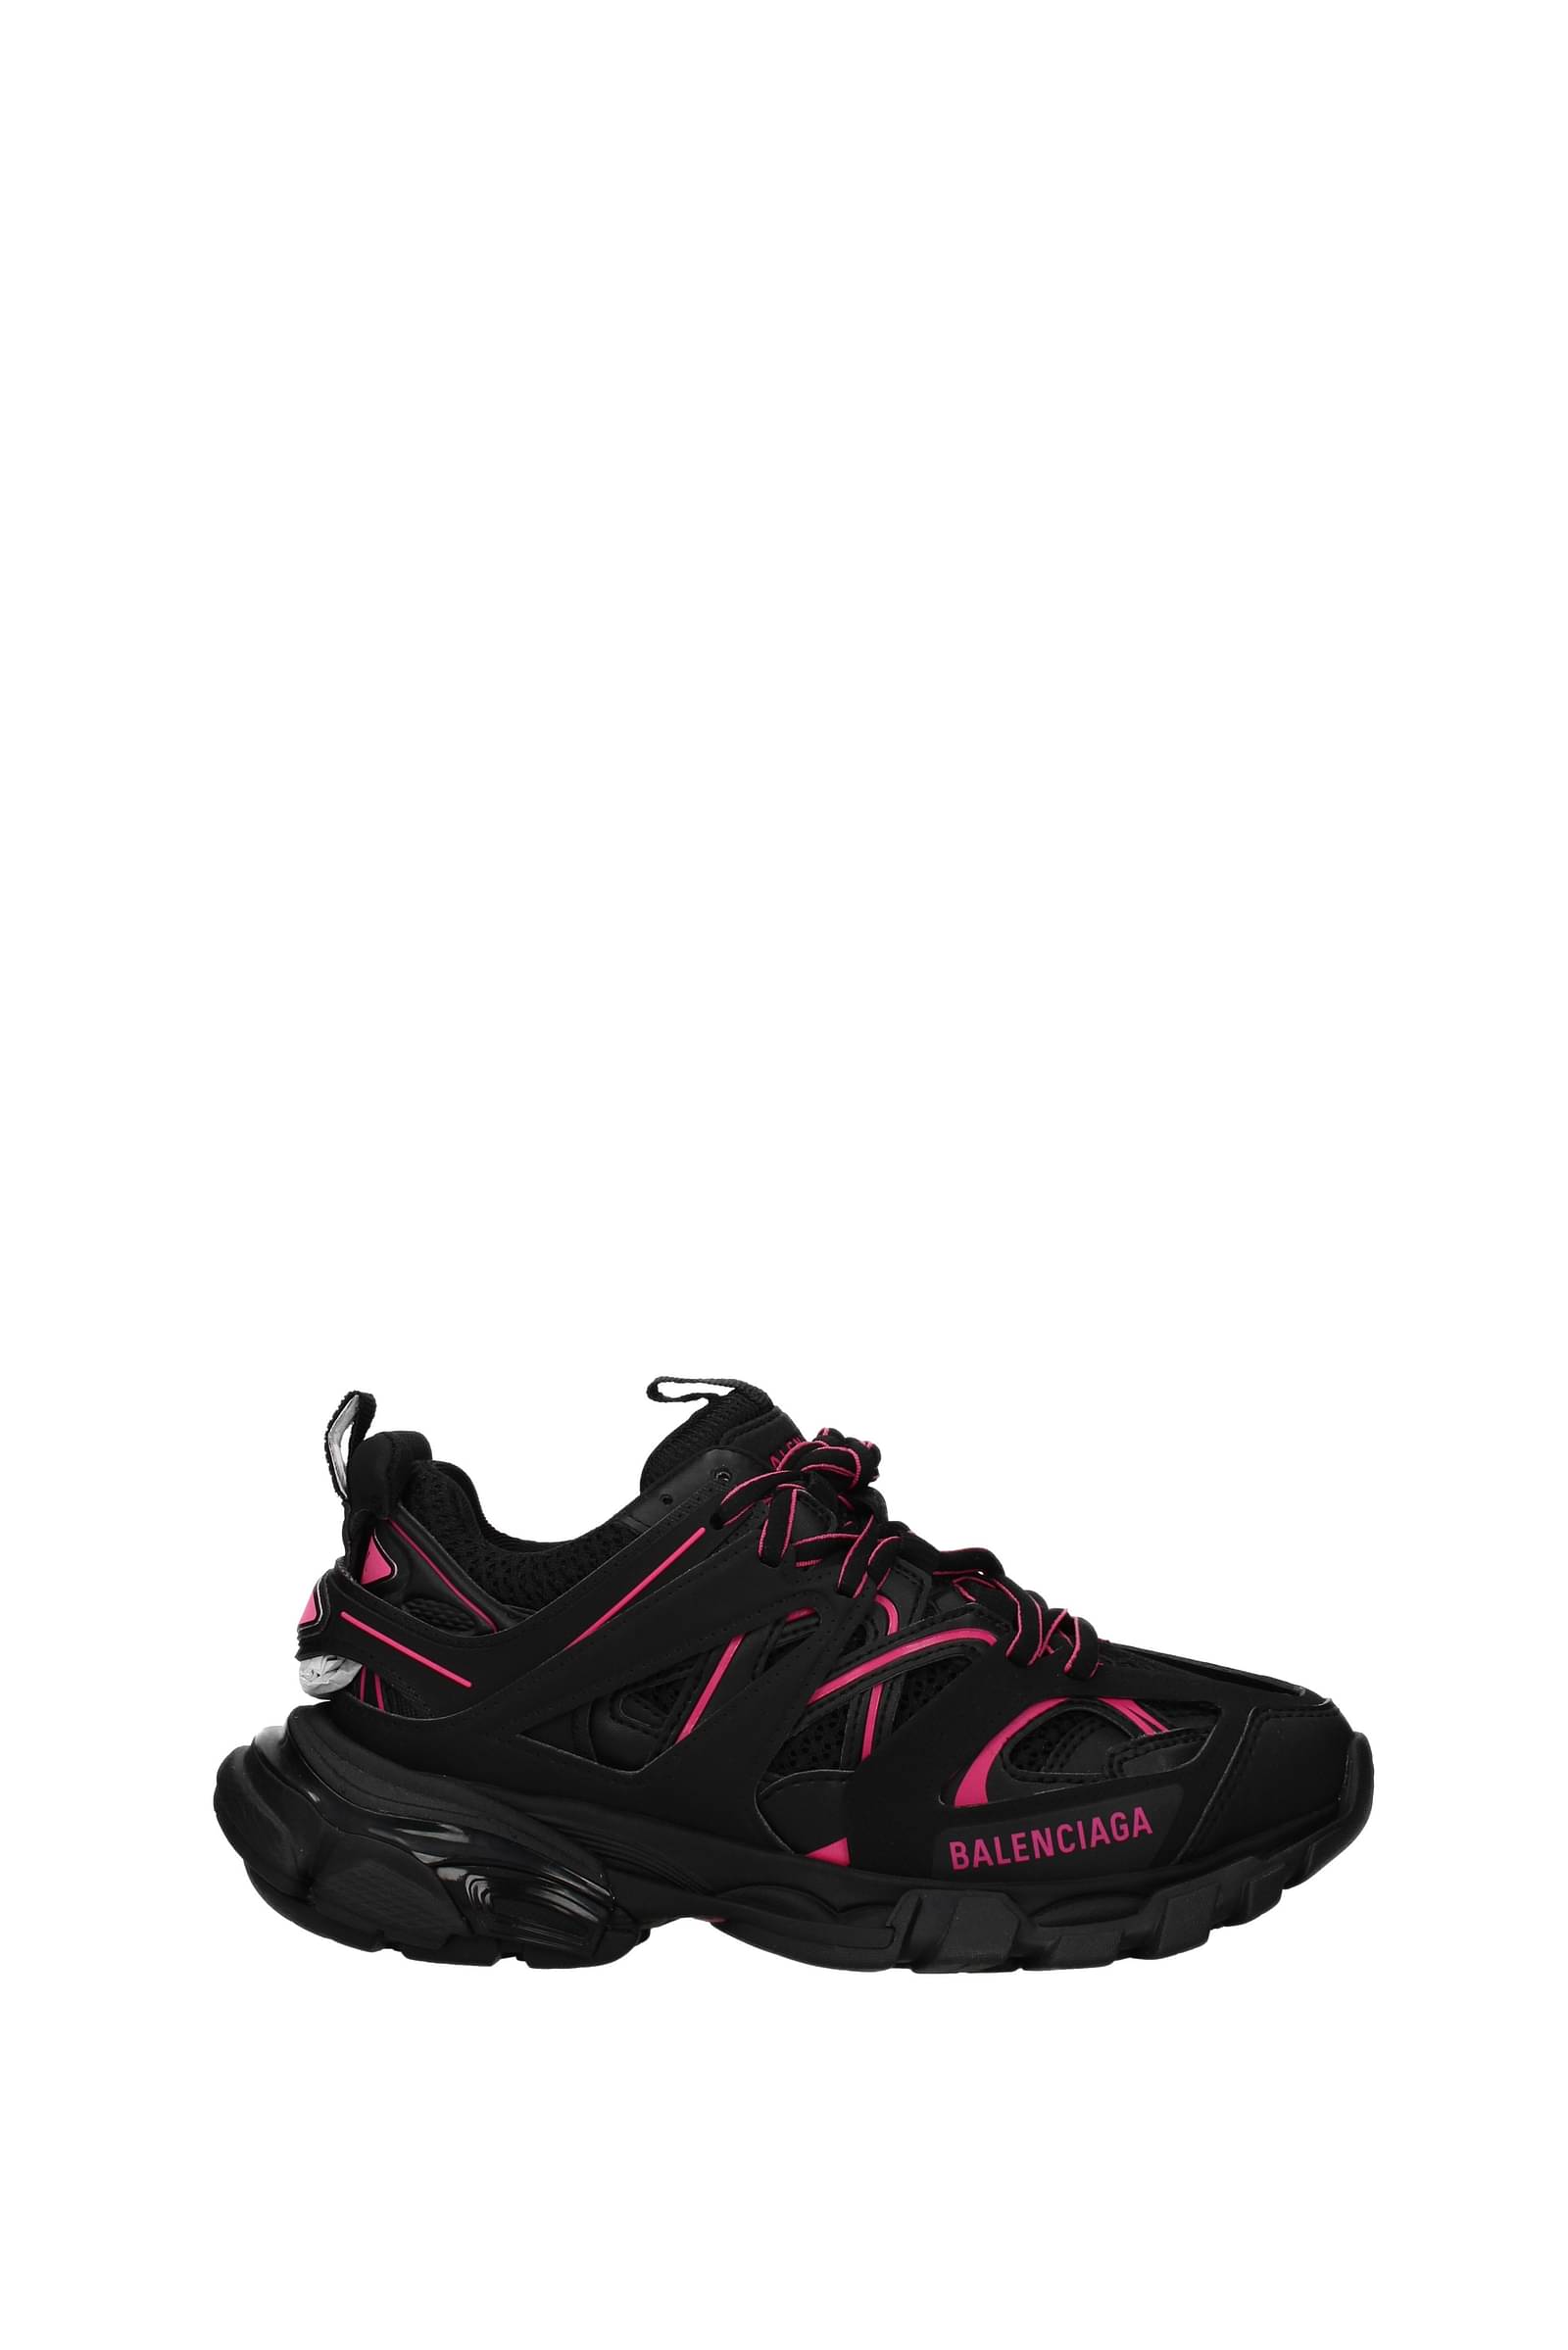 Giày Balenciaga Track 2 Light Pink Siêu Cấp Like Au 999